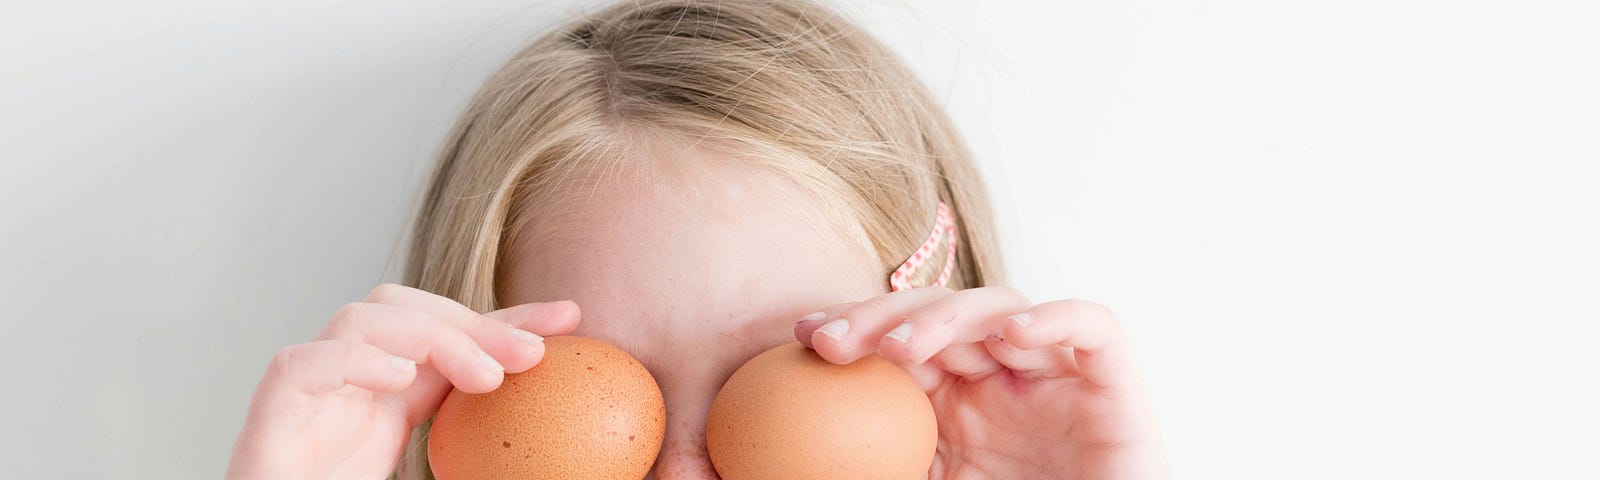 Little girl holding two eggs covering her eyes